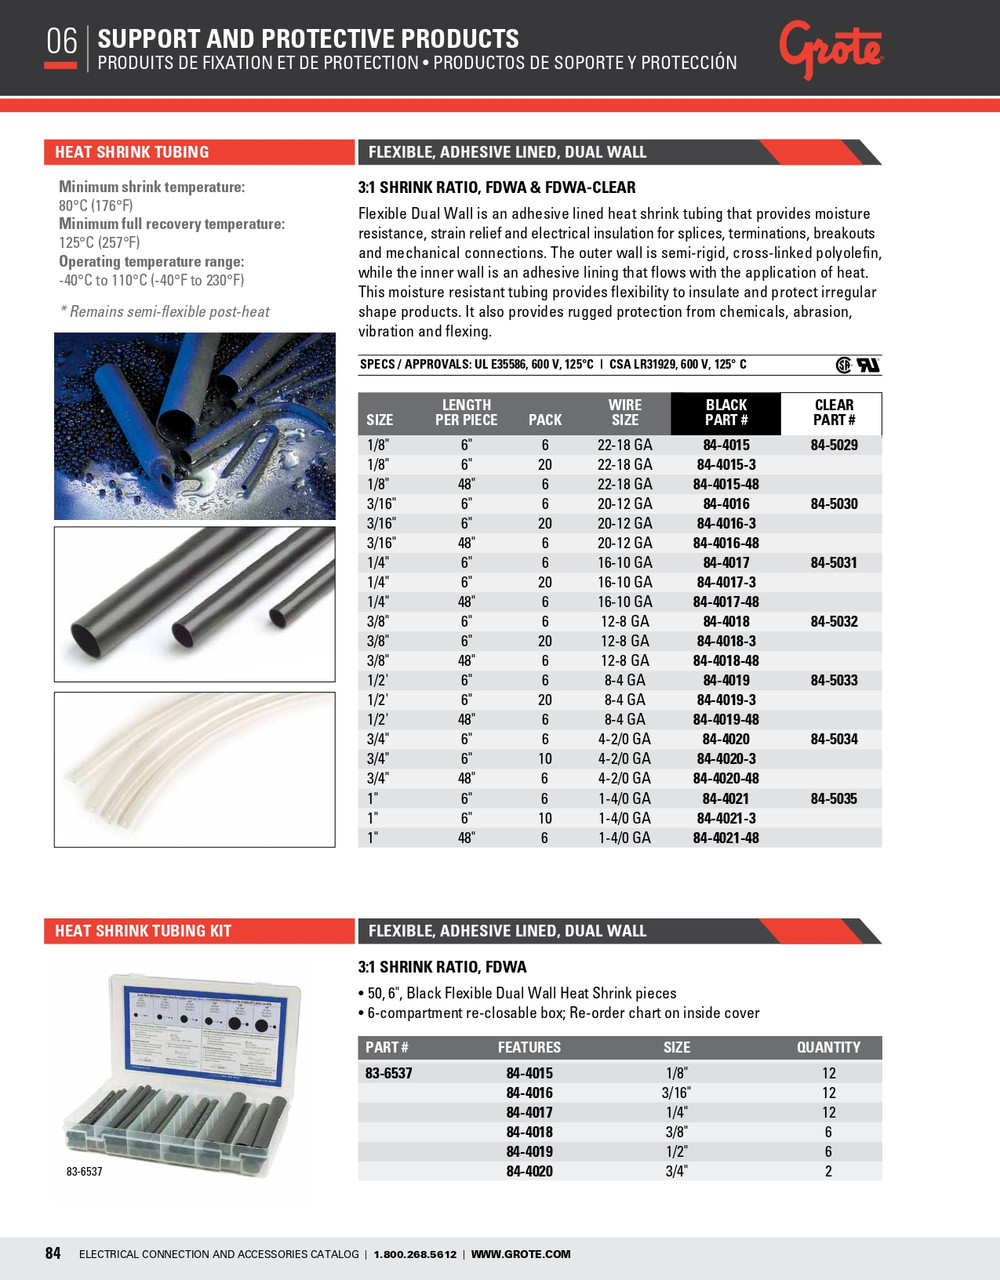 1/8" Dual Wall 3:1 Flexible Adhesive Lined Heat Shrink Tubing 48" @ 6 Pack - Black  84-4015-48